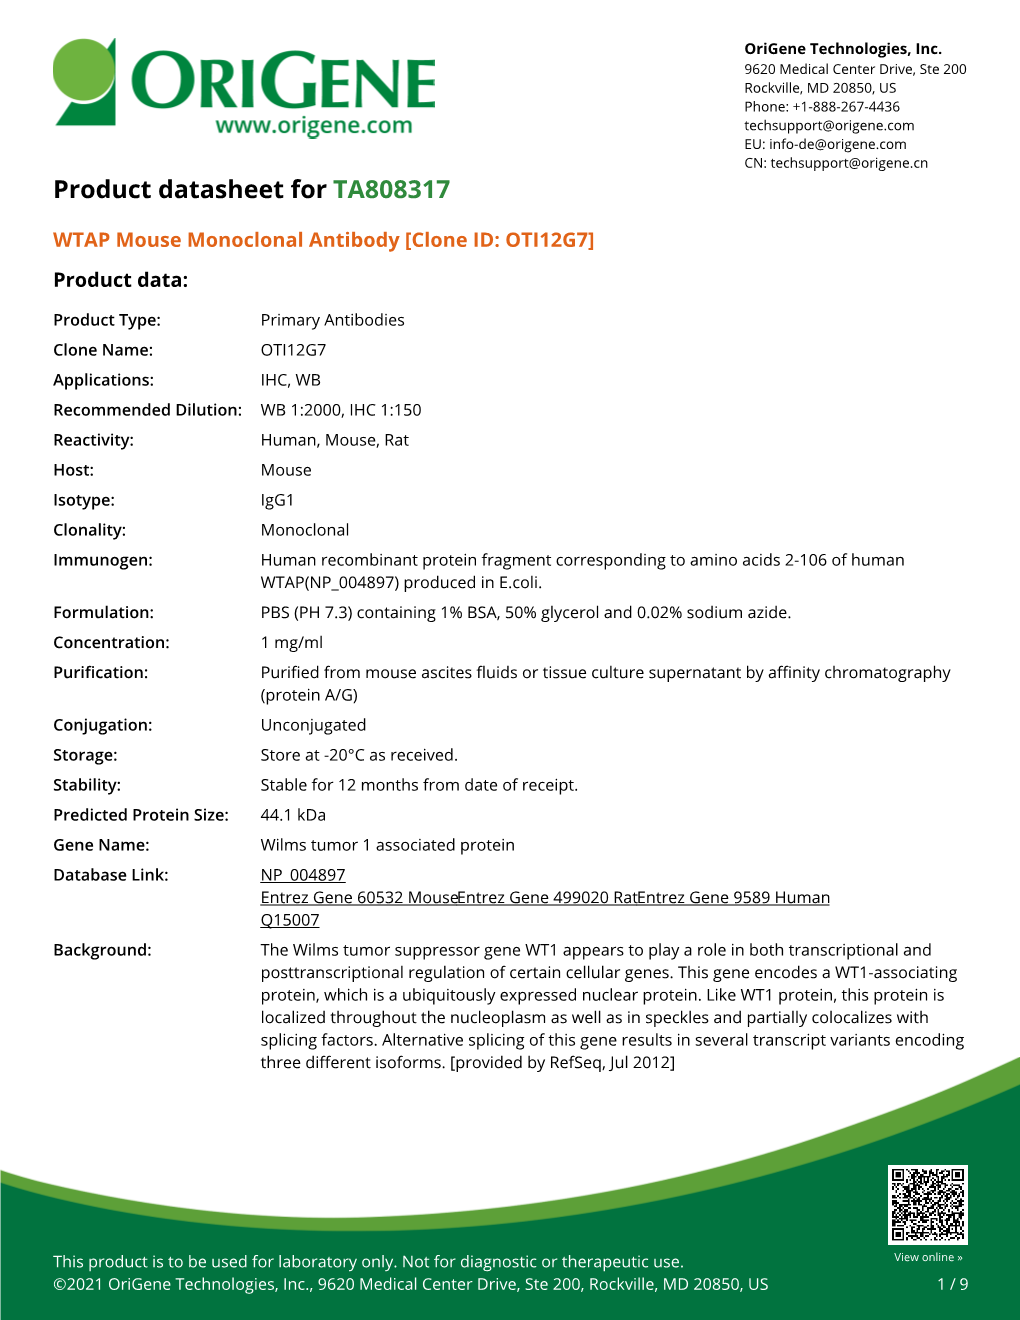 WTAP Mouse Monoclonal Antibody [Clone ID: OTI12G7] Product Data